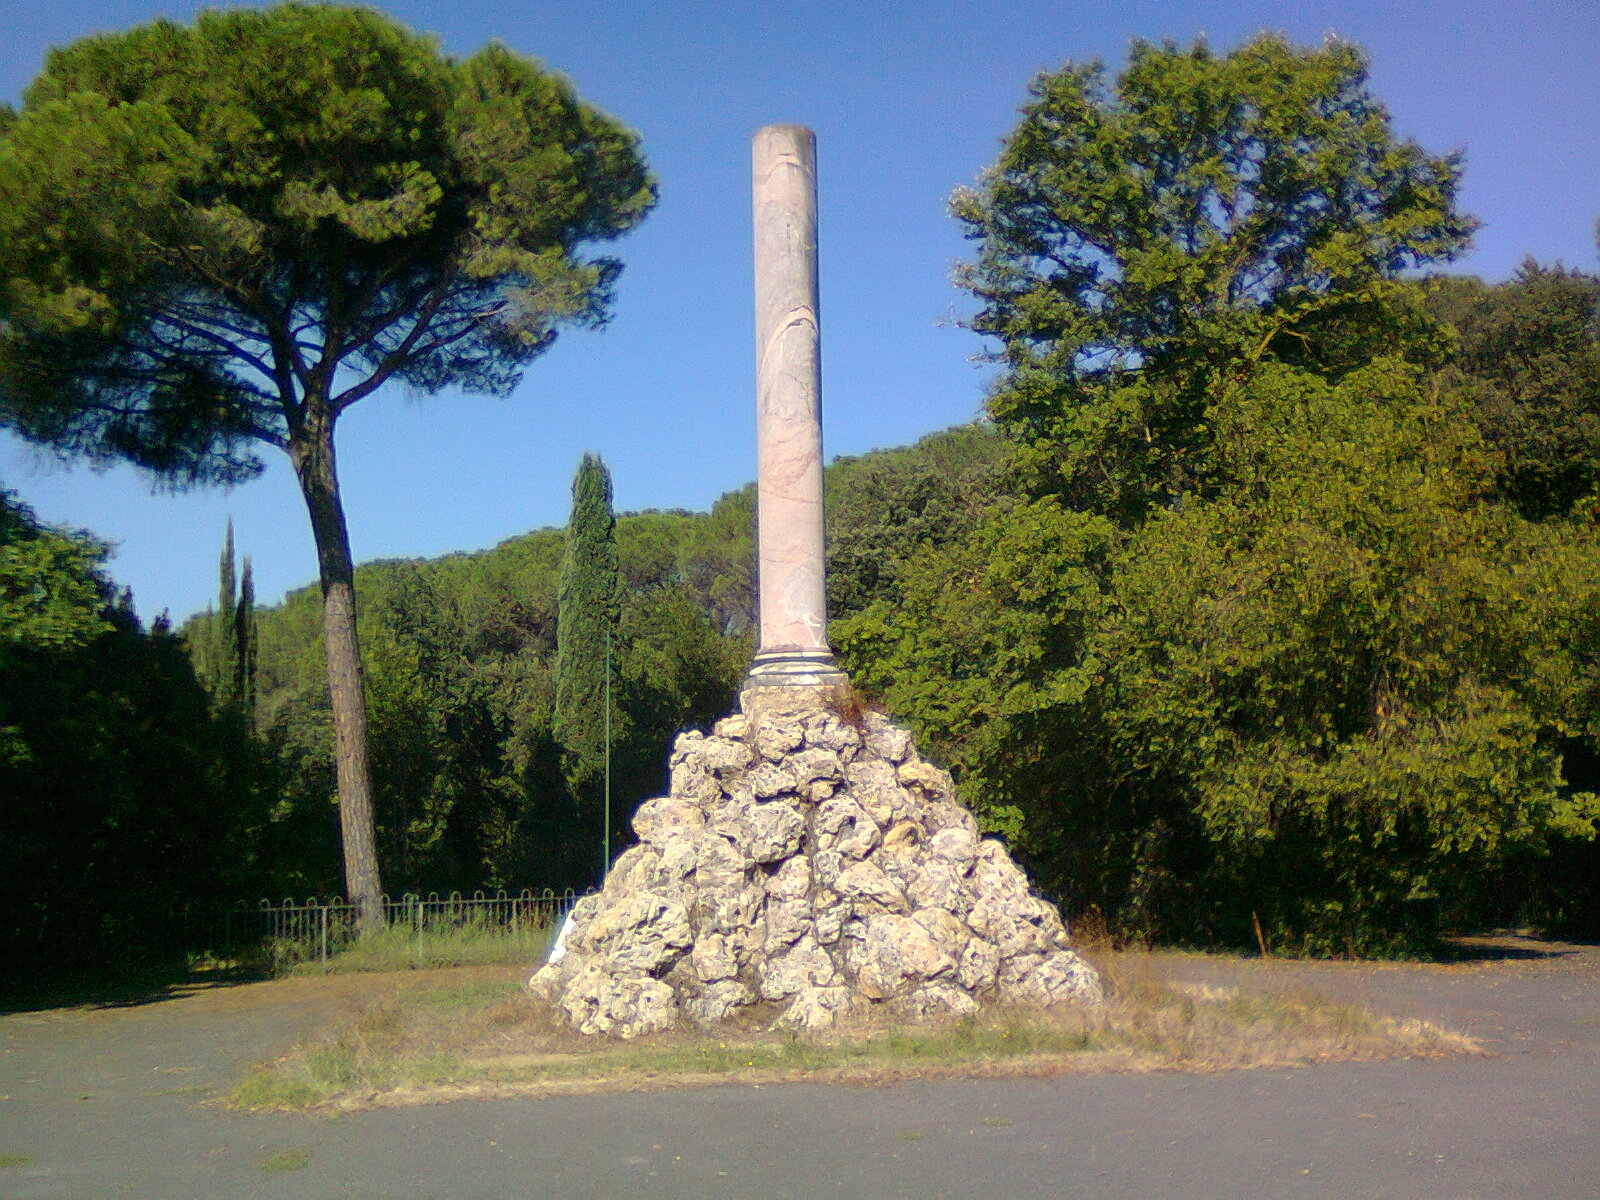 La colonna dedicata al sacrificio dei fratelli Cairoli